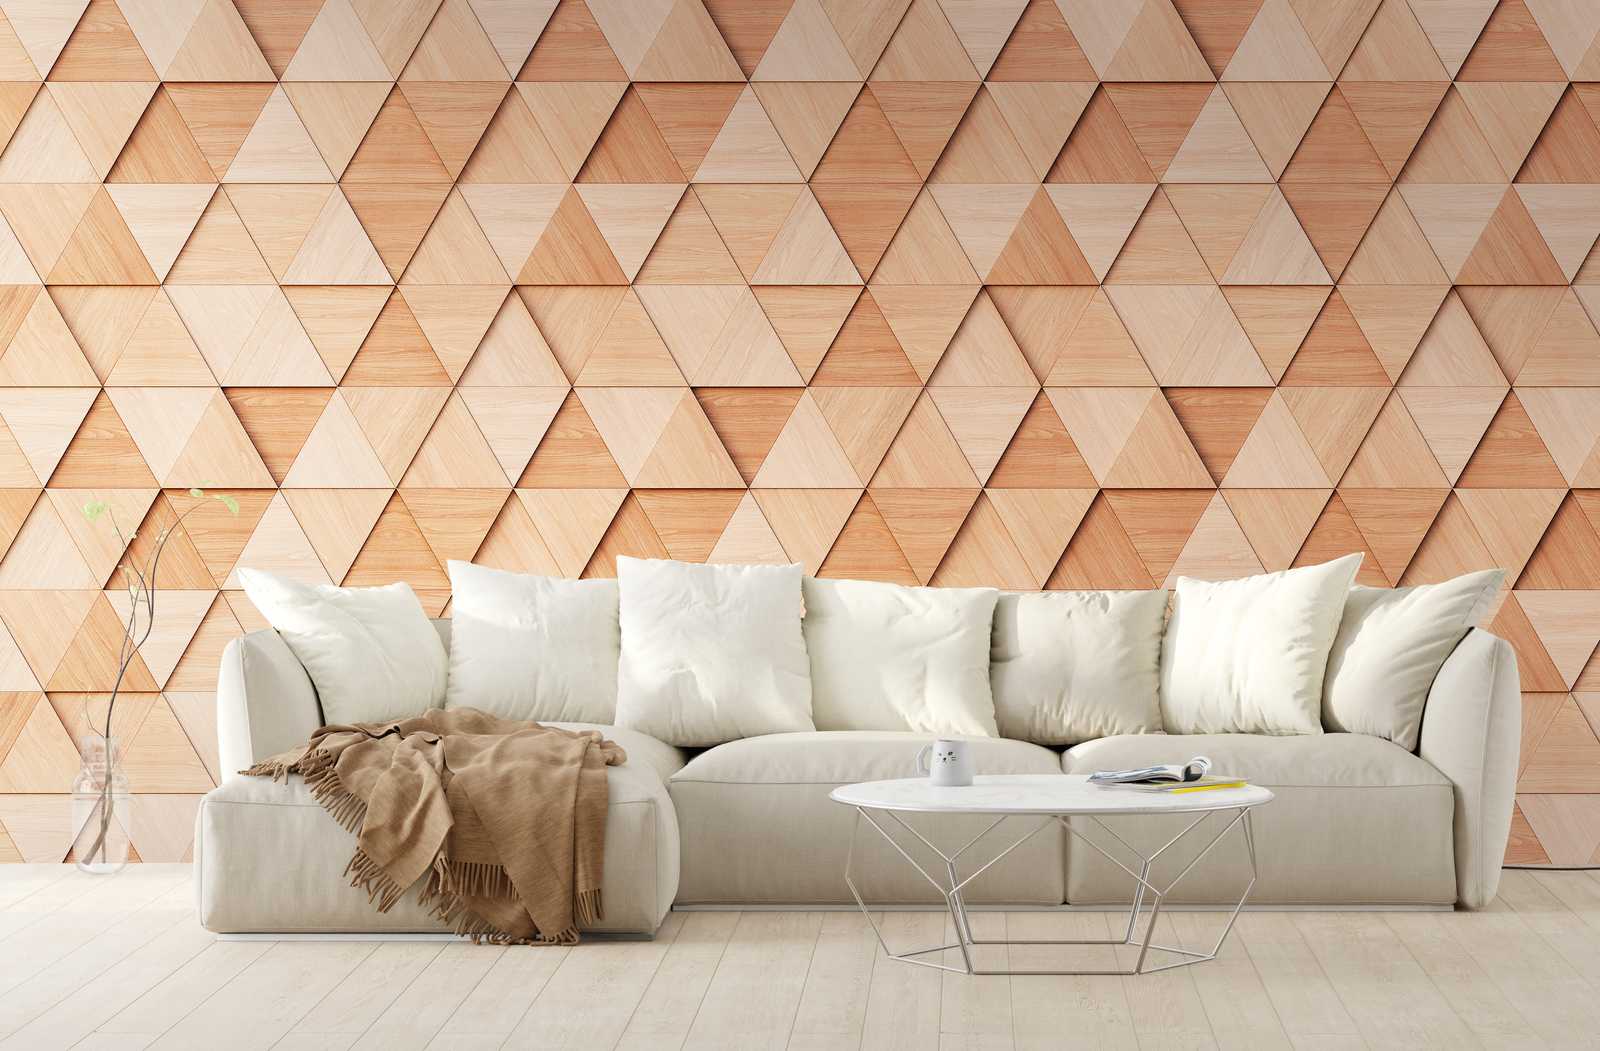             Wallpaper novelty - motif wallpaper wood-look design with 3D triangle pattern
        